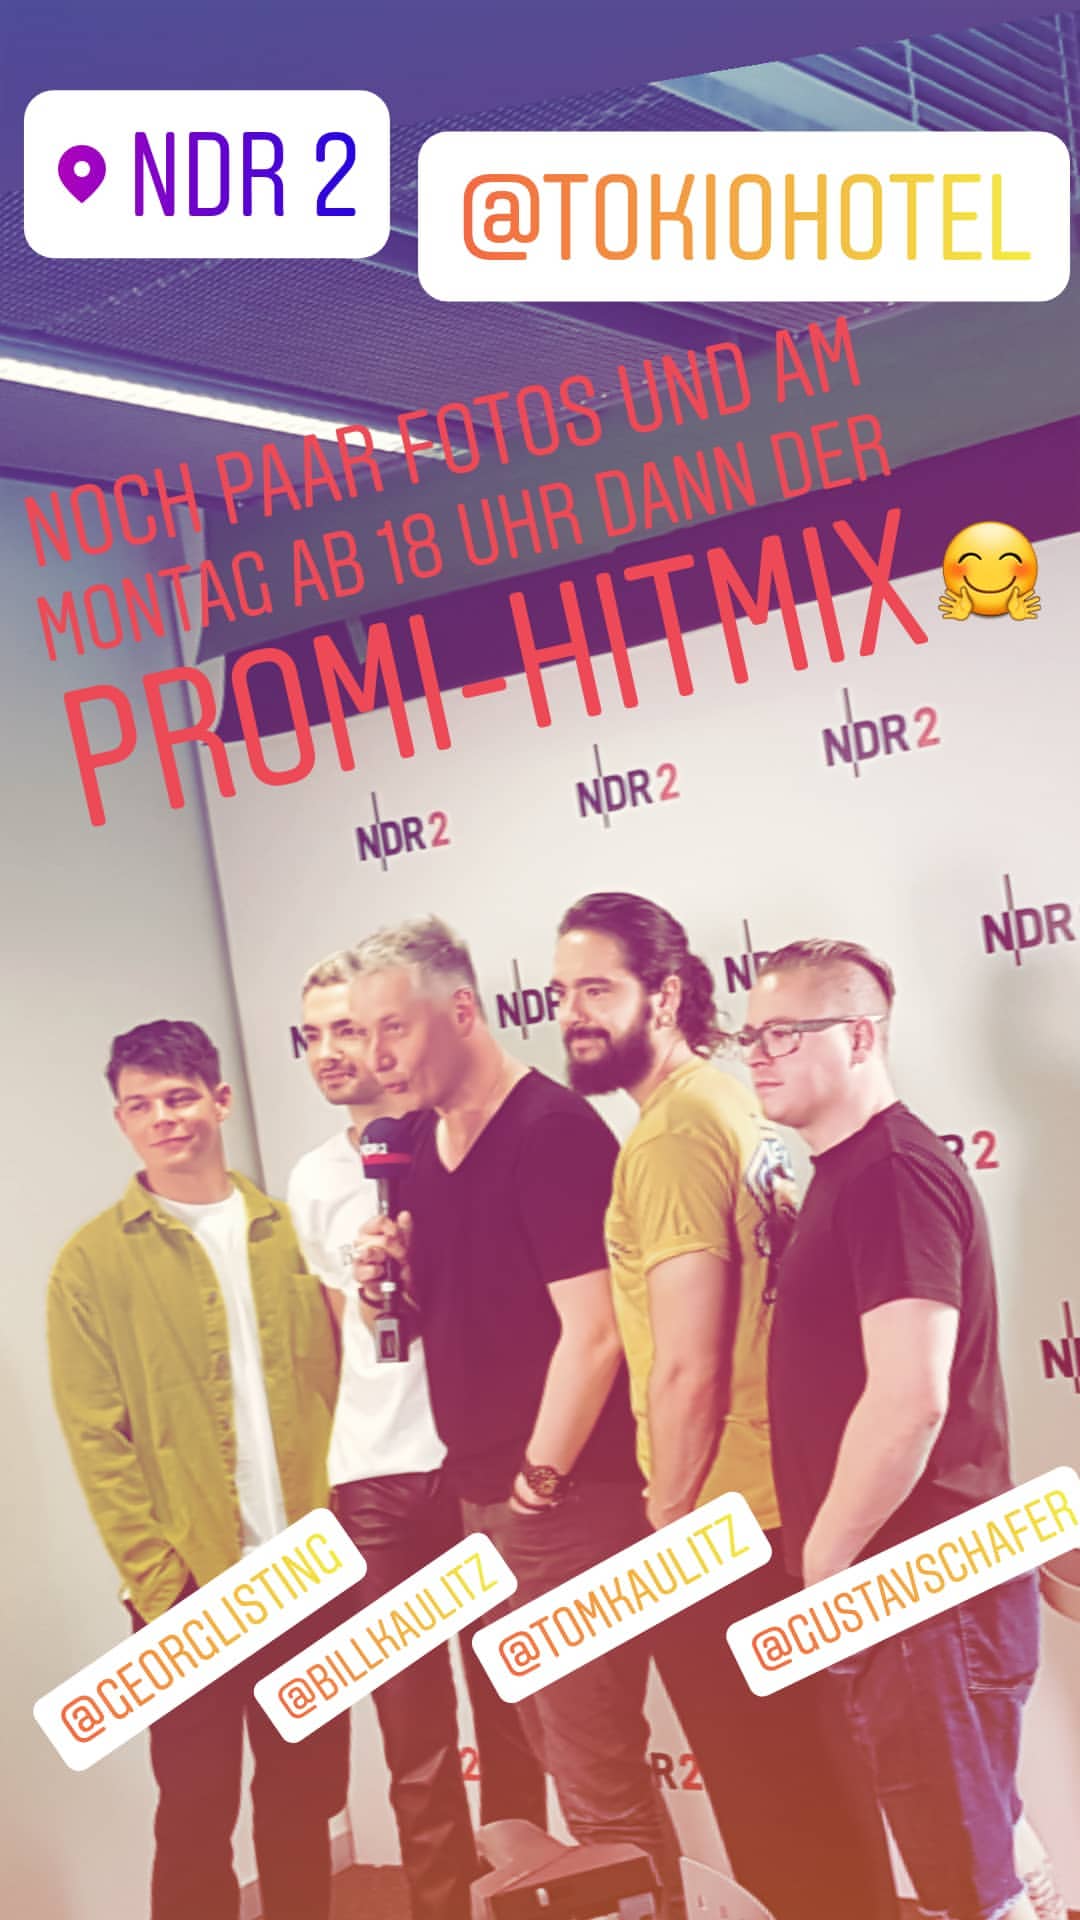 28.05.19 - radio promo, Berlin